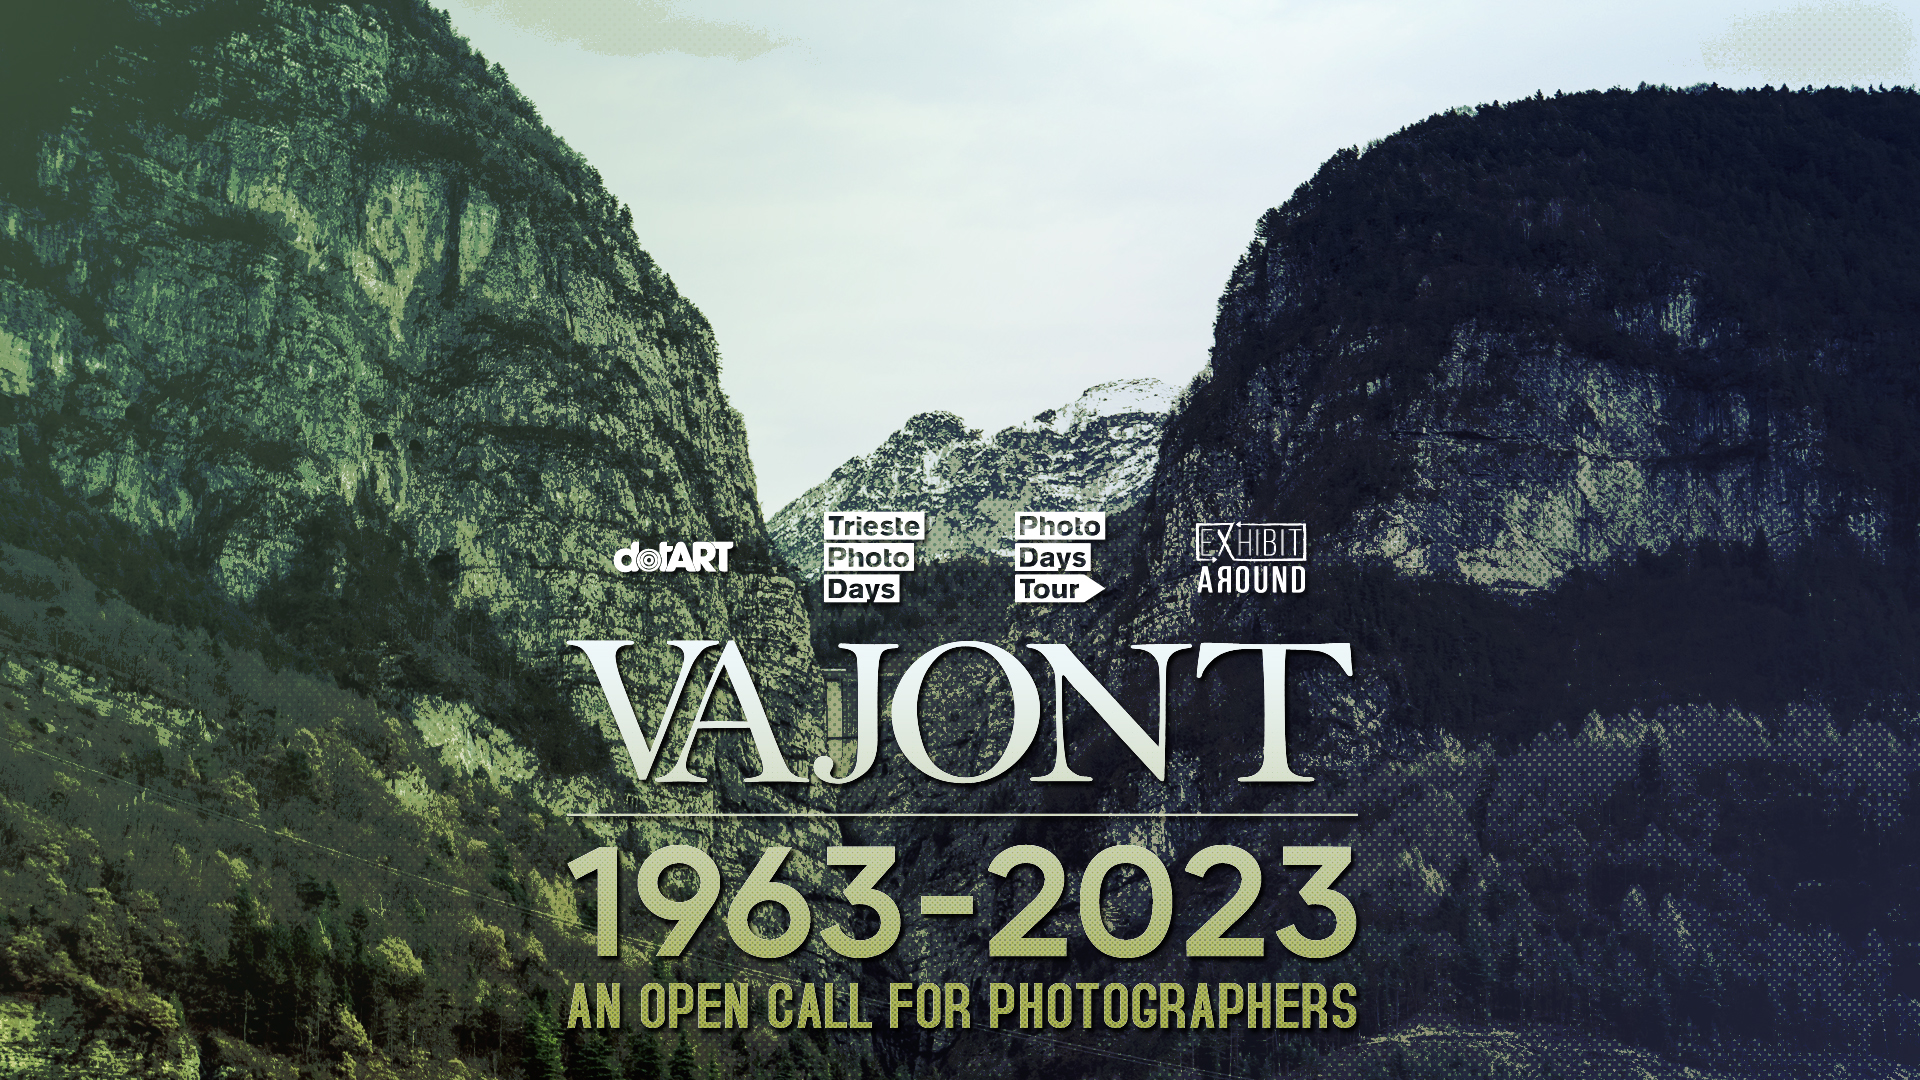 Progetto fotografico dedicato al Vajont